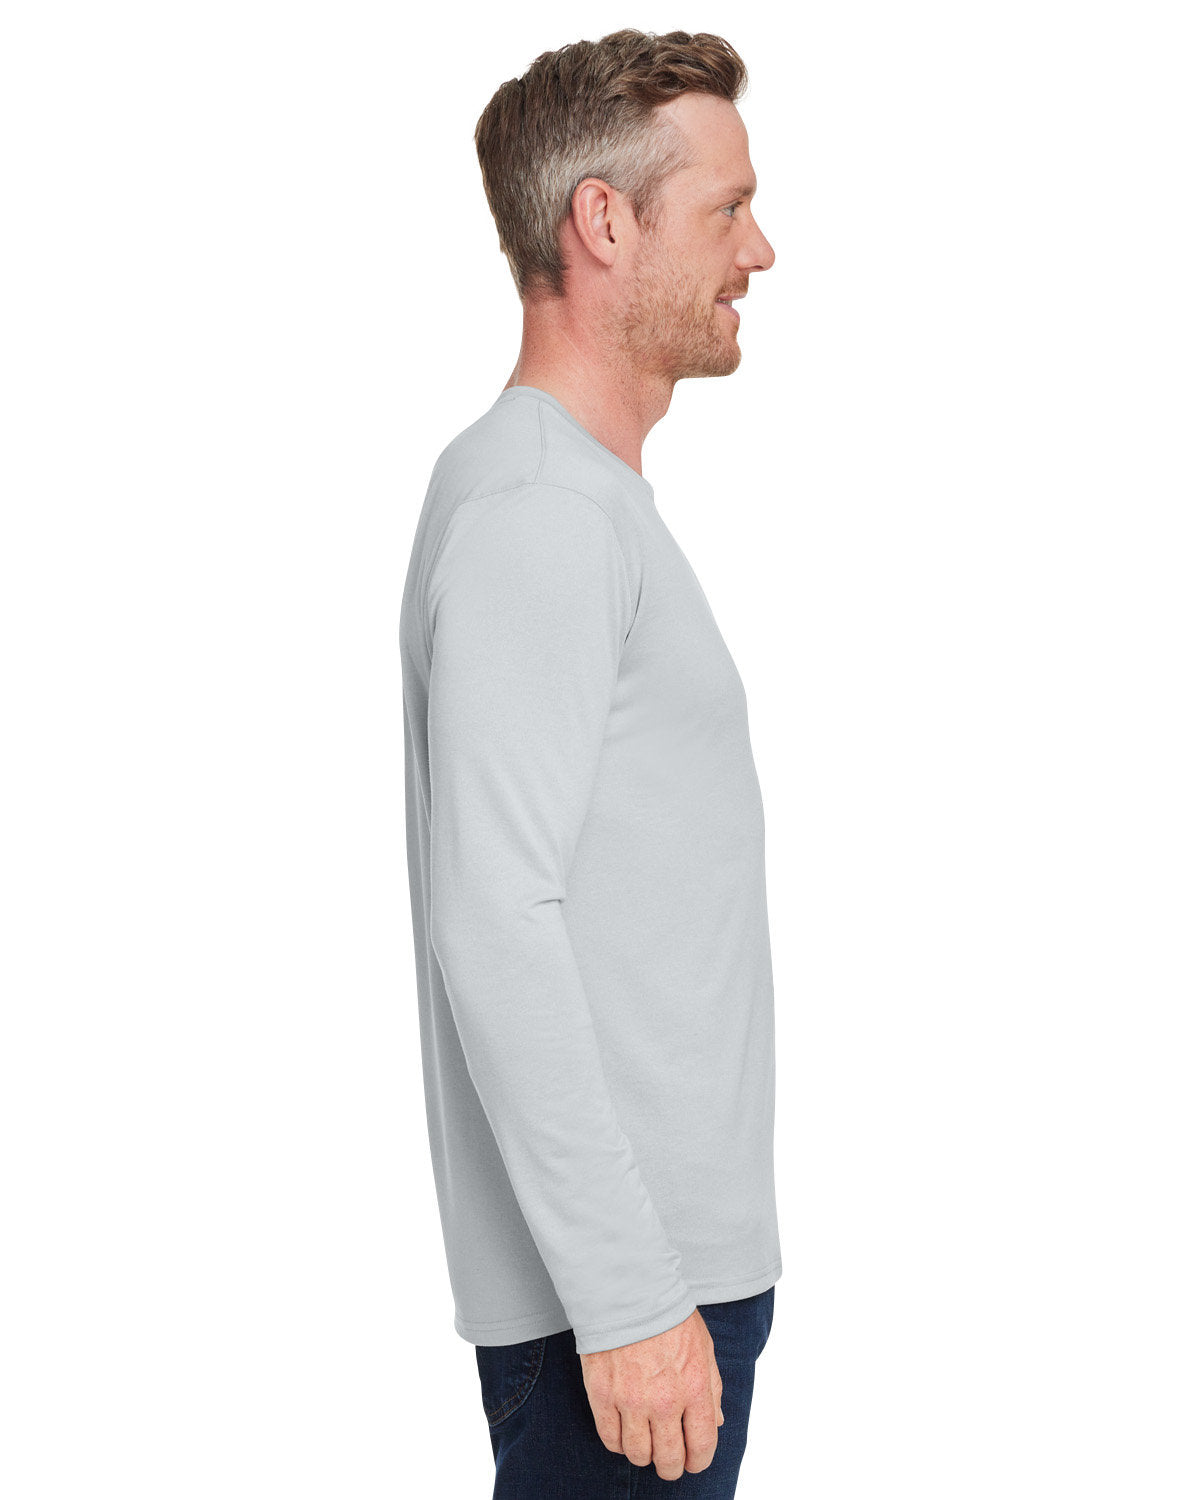 Under Armour Men's Tech Long-Sleeve Branded T-Shirts, Mod Grey